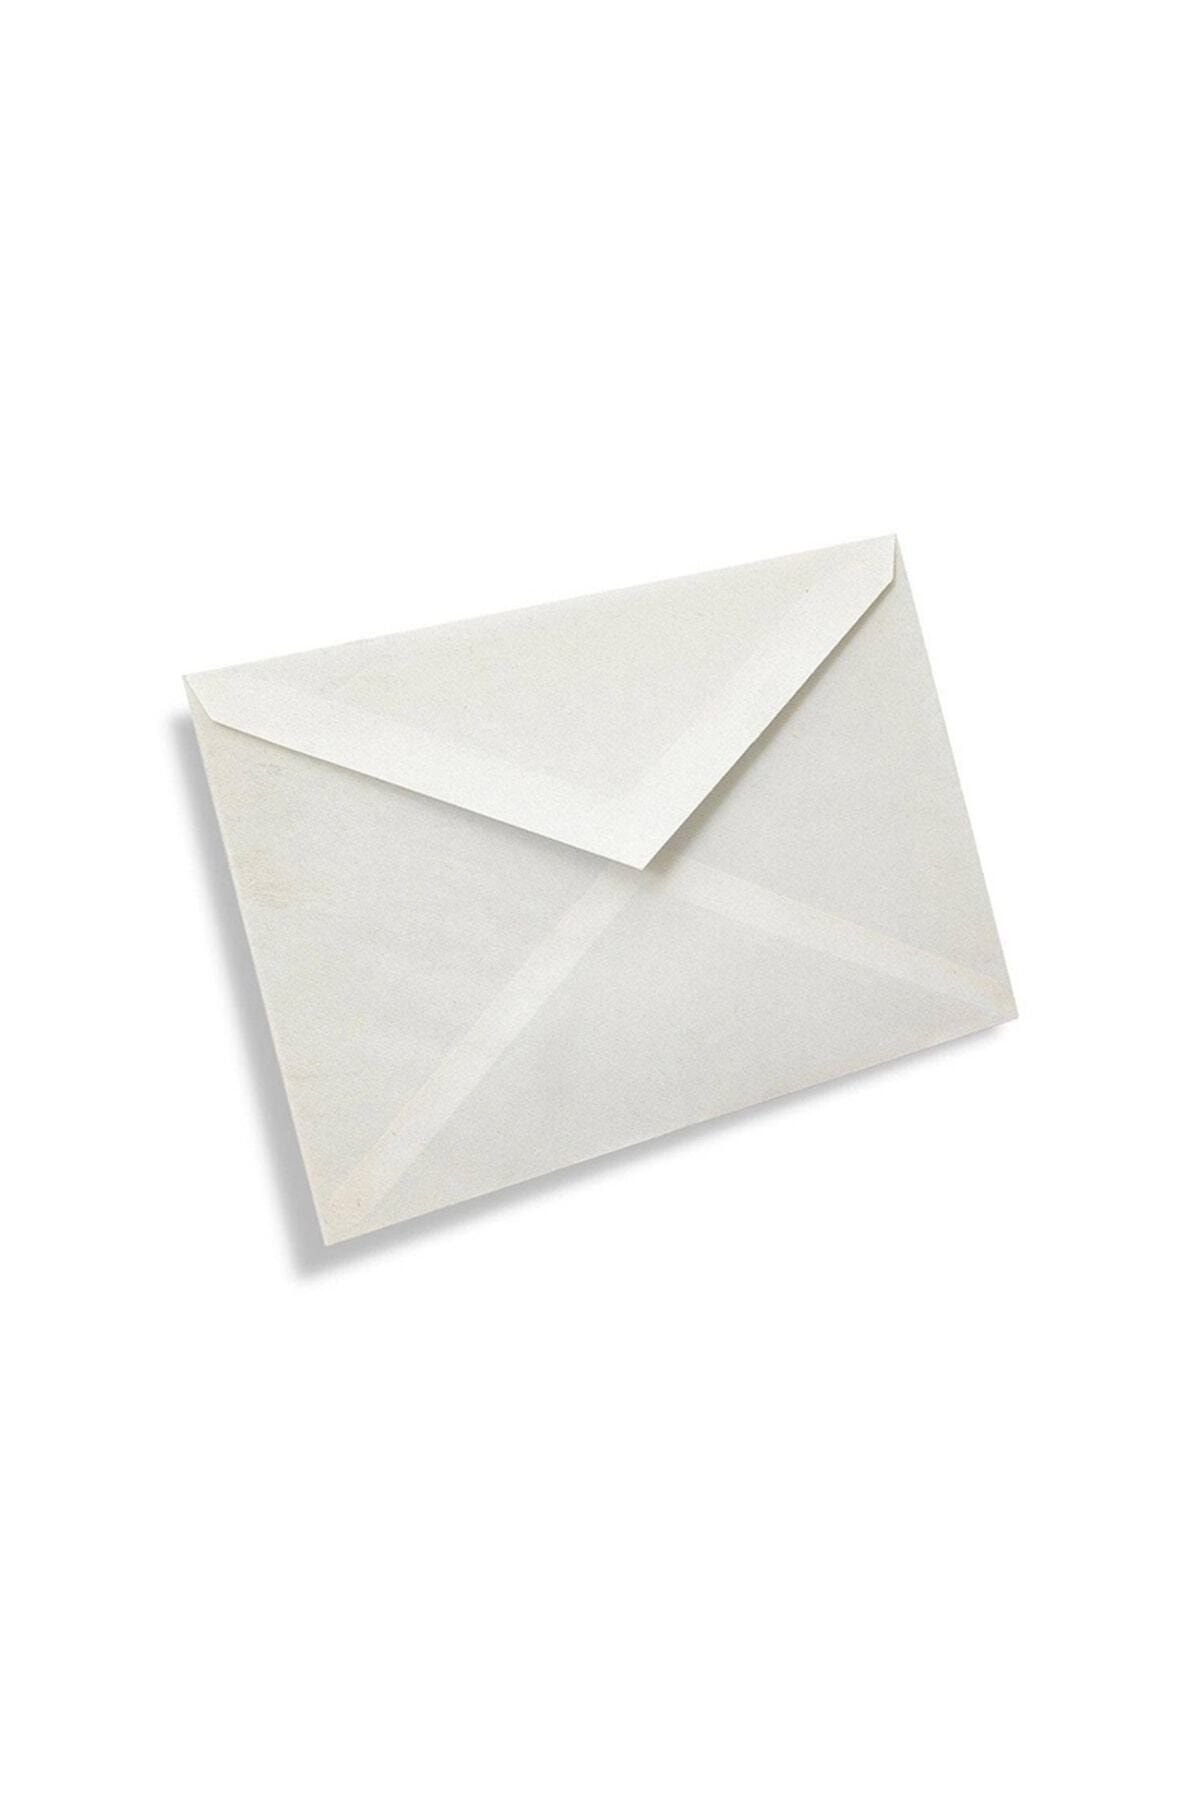 doğan zarf Asil Mektup Zarfı 114x162 Beyaz 500'lü Paket